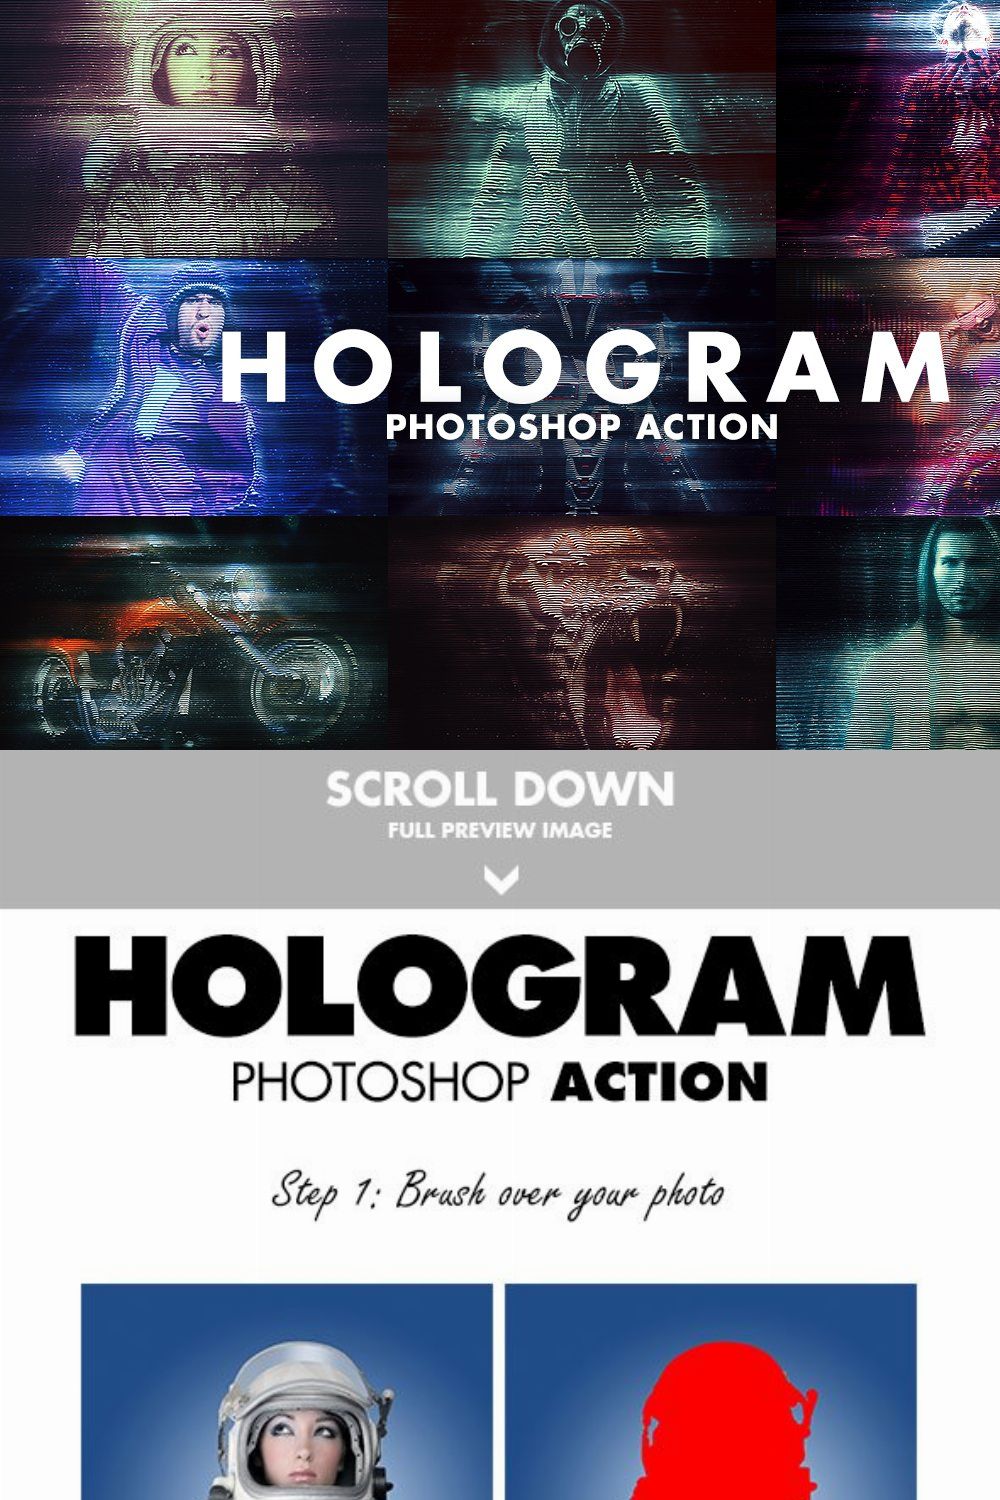 Hologram Photoshop Action pinterest preview image.